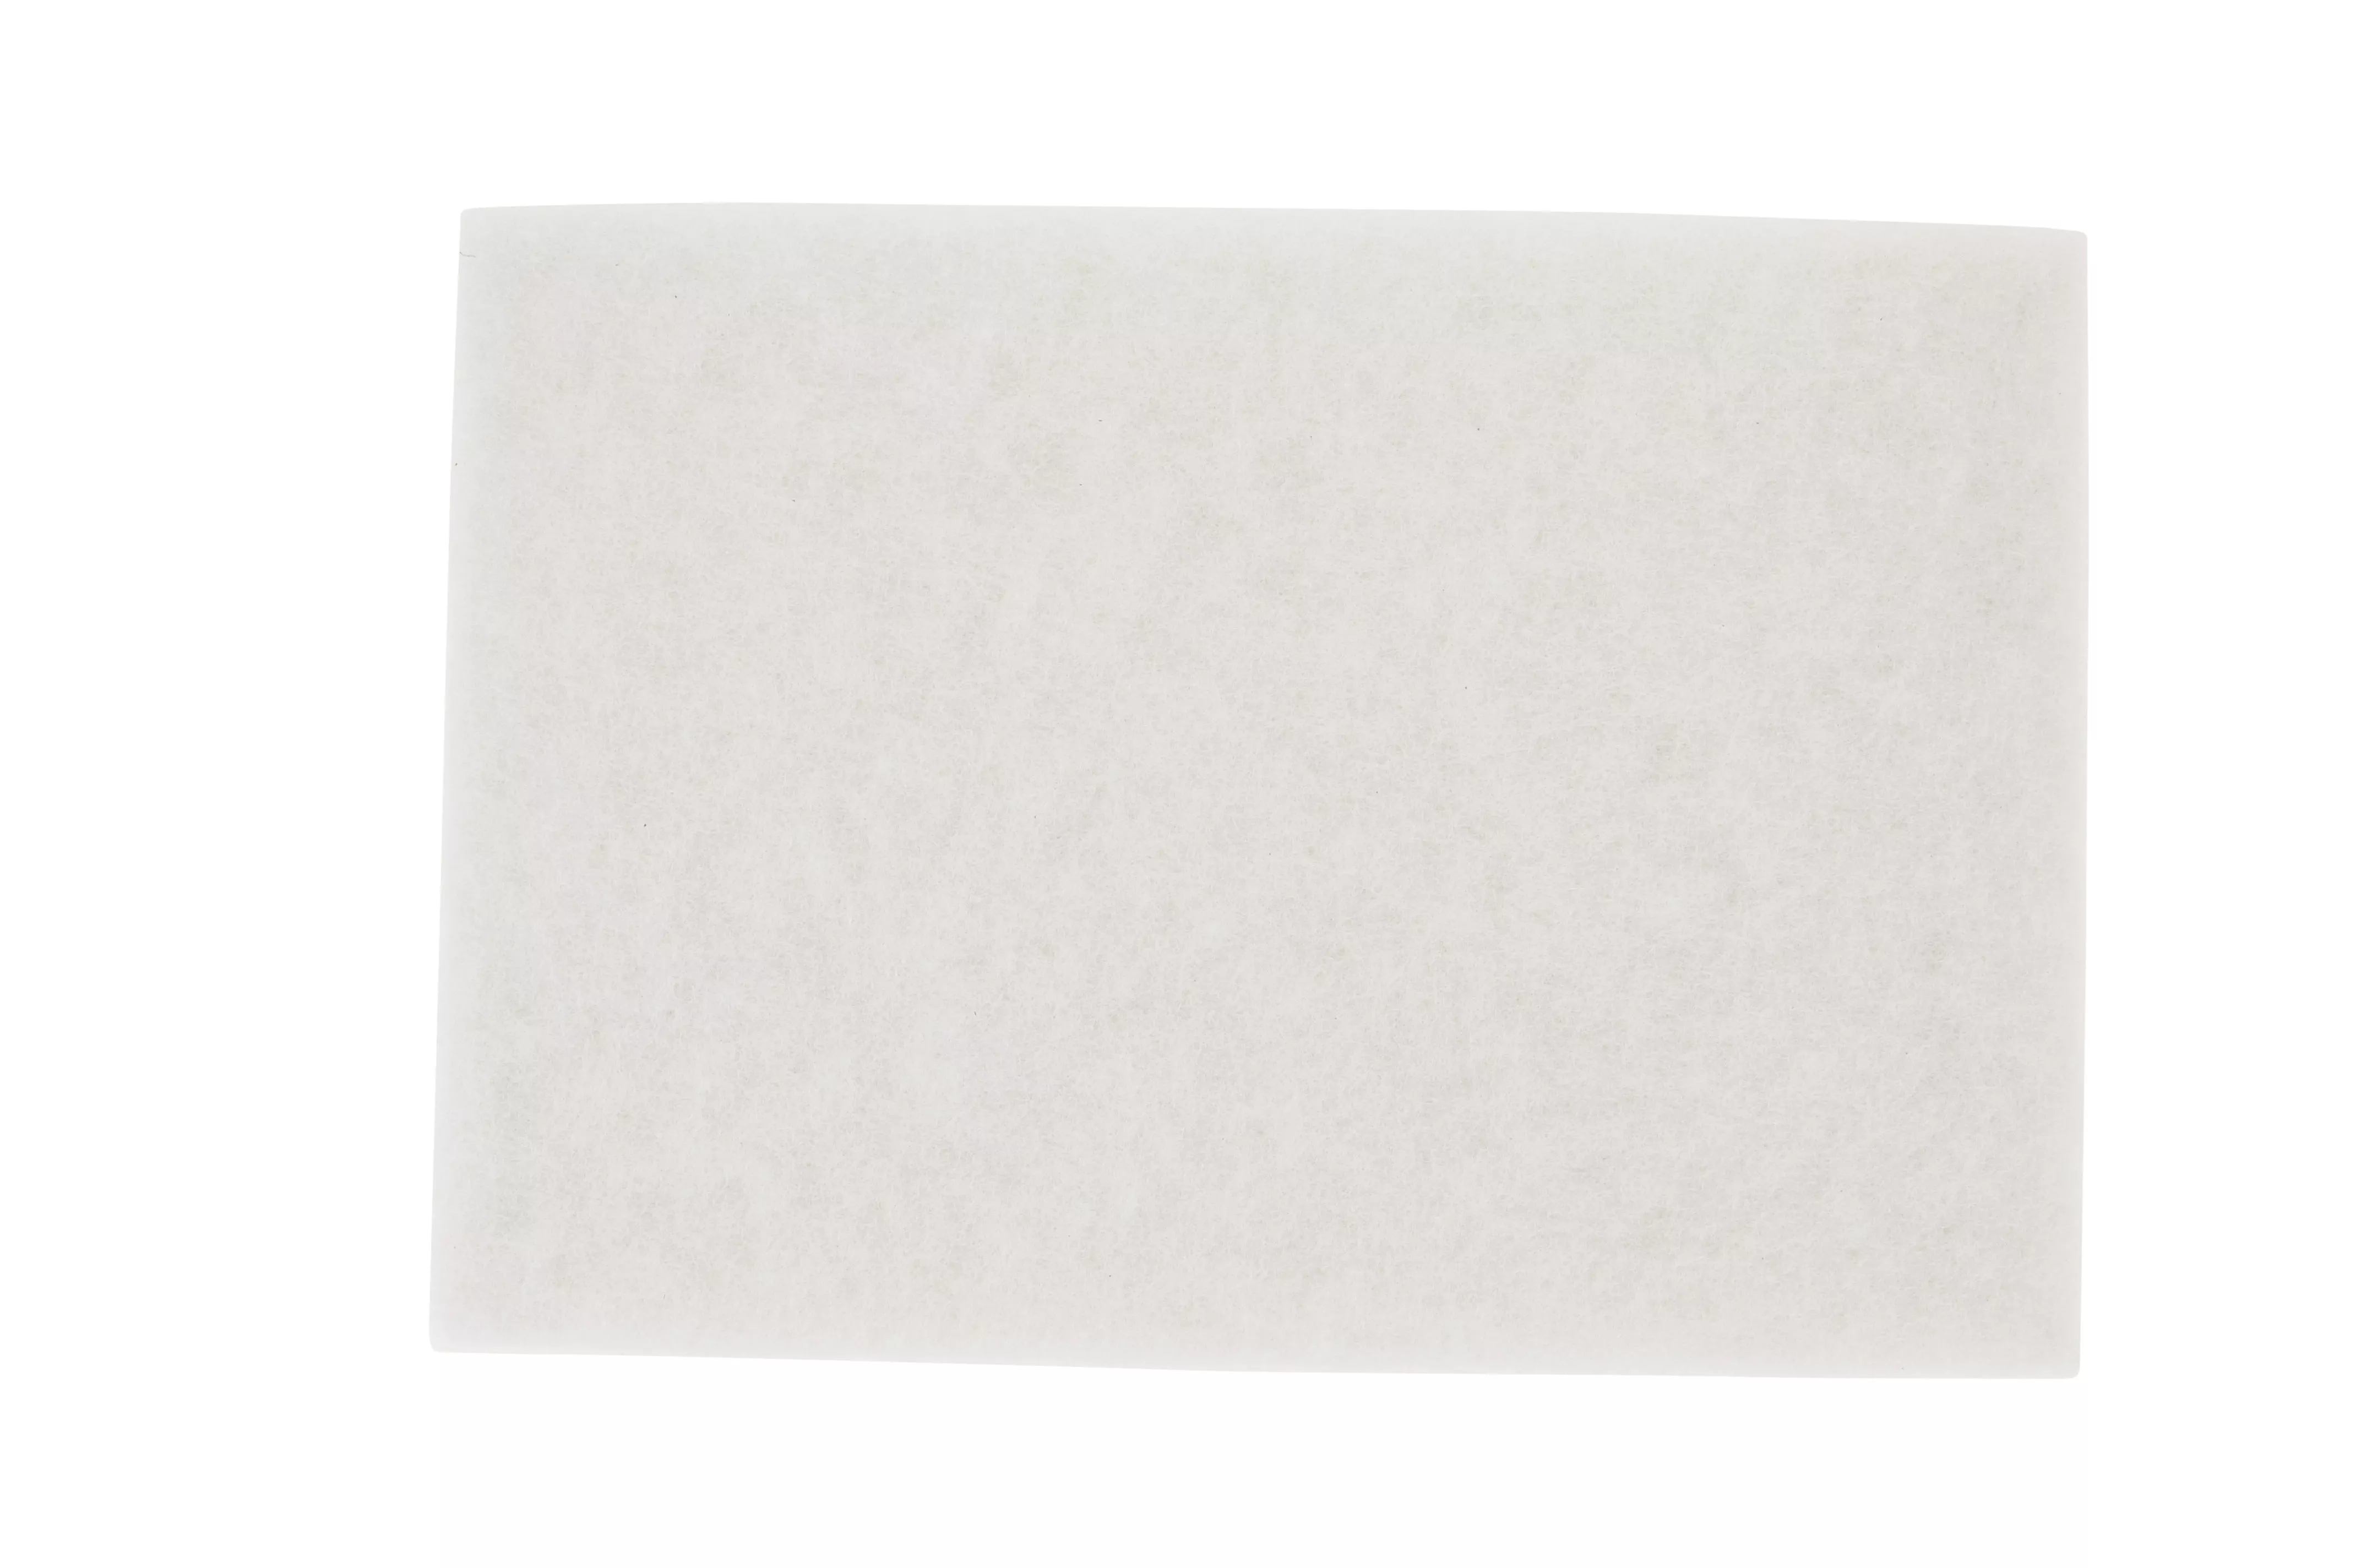 3M™ White Super Polish Pad 4100, 20 in x 14 in, 10/Case